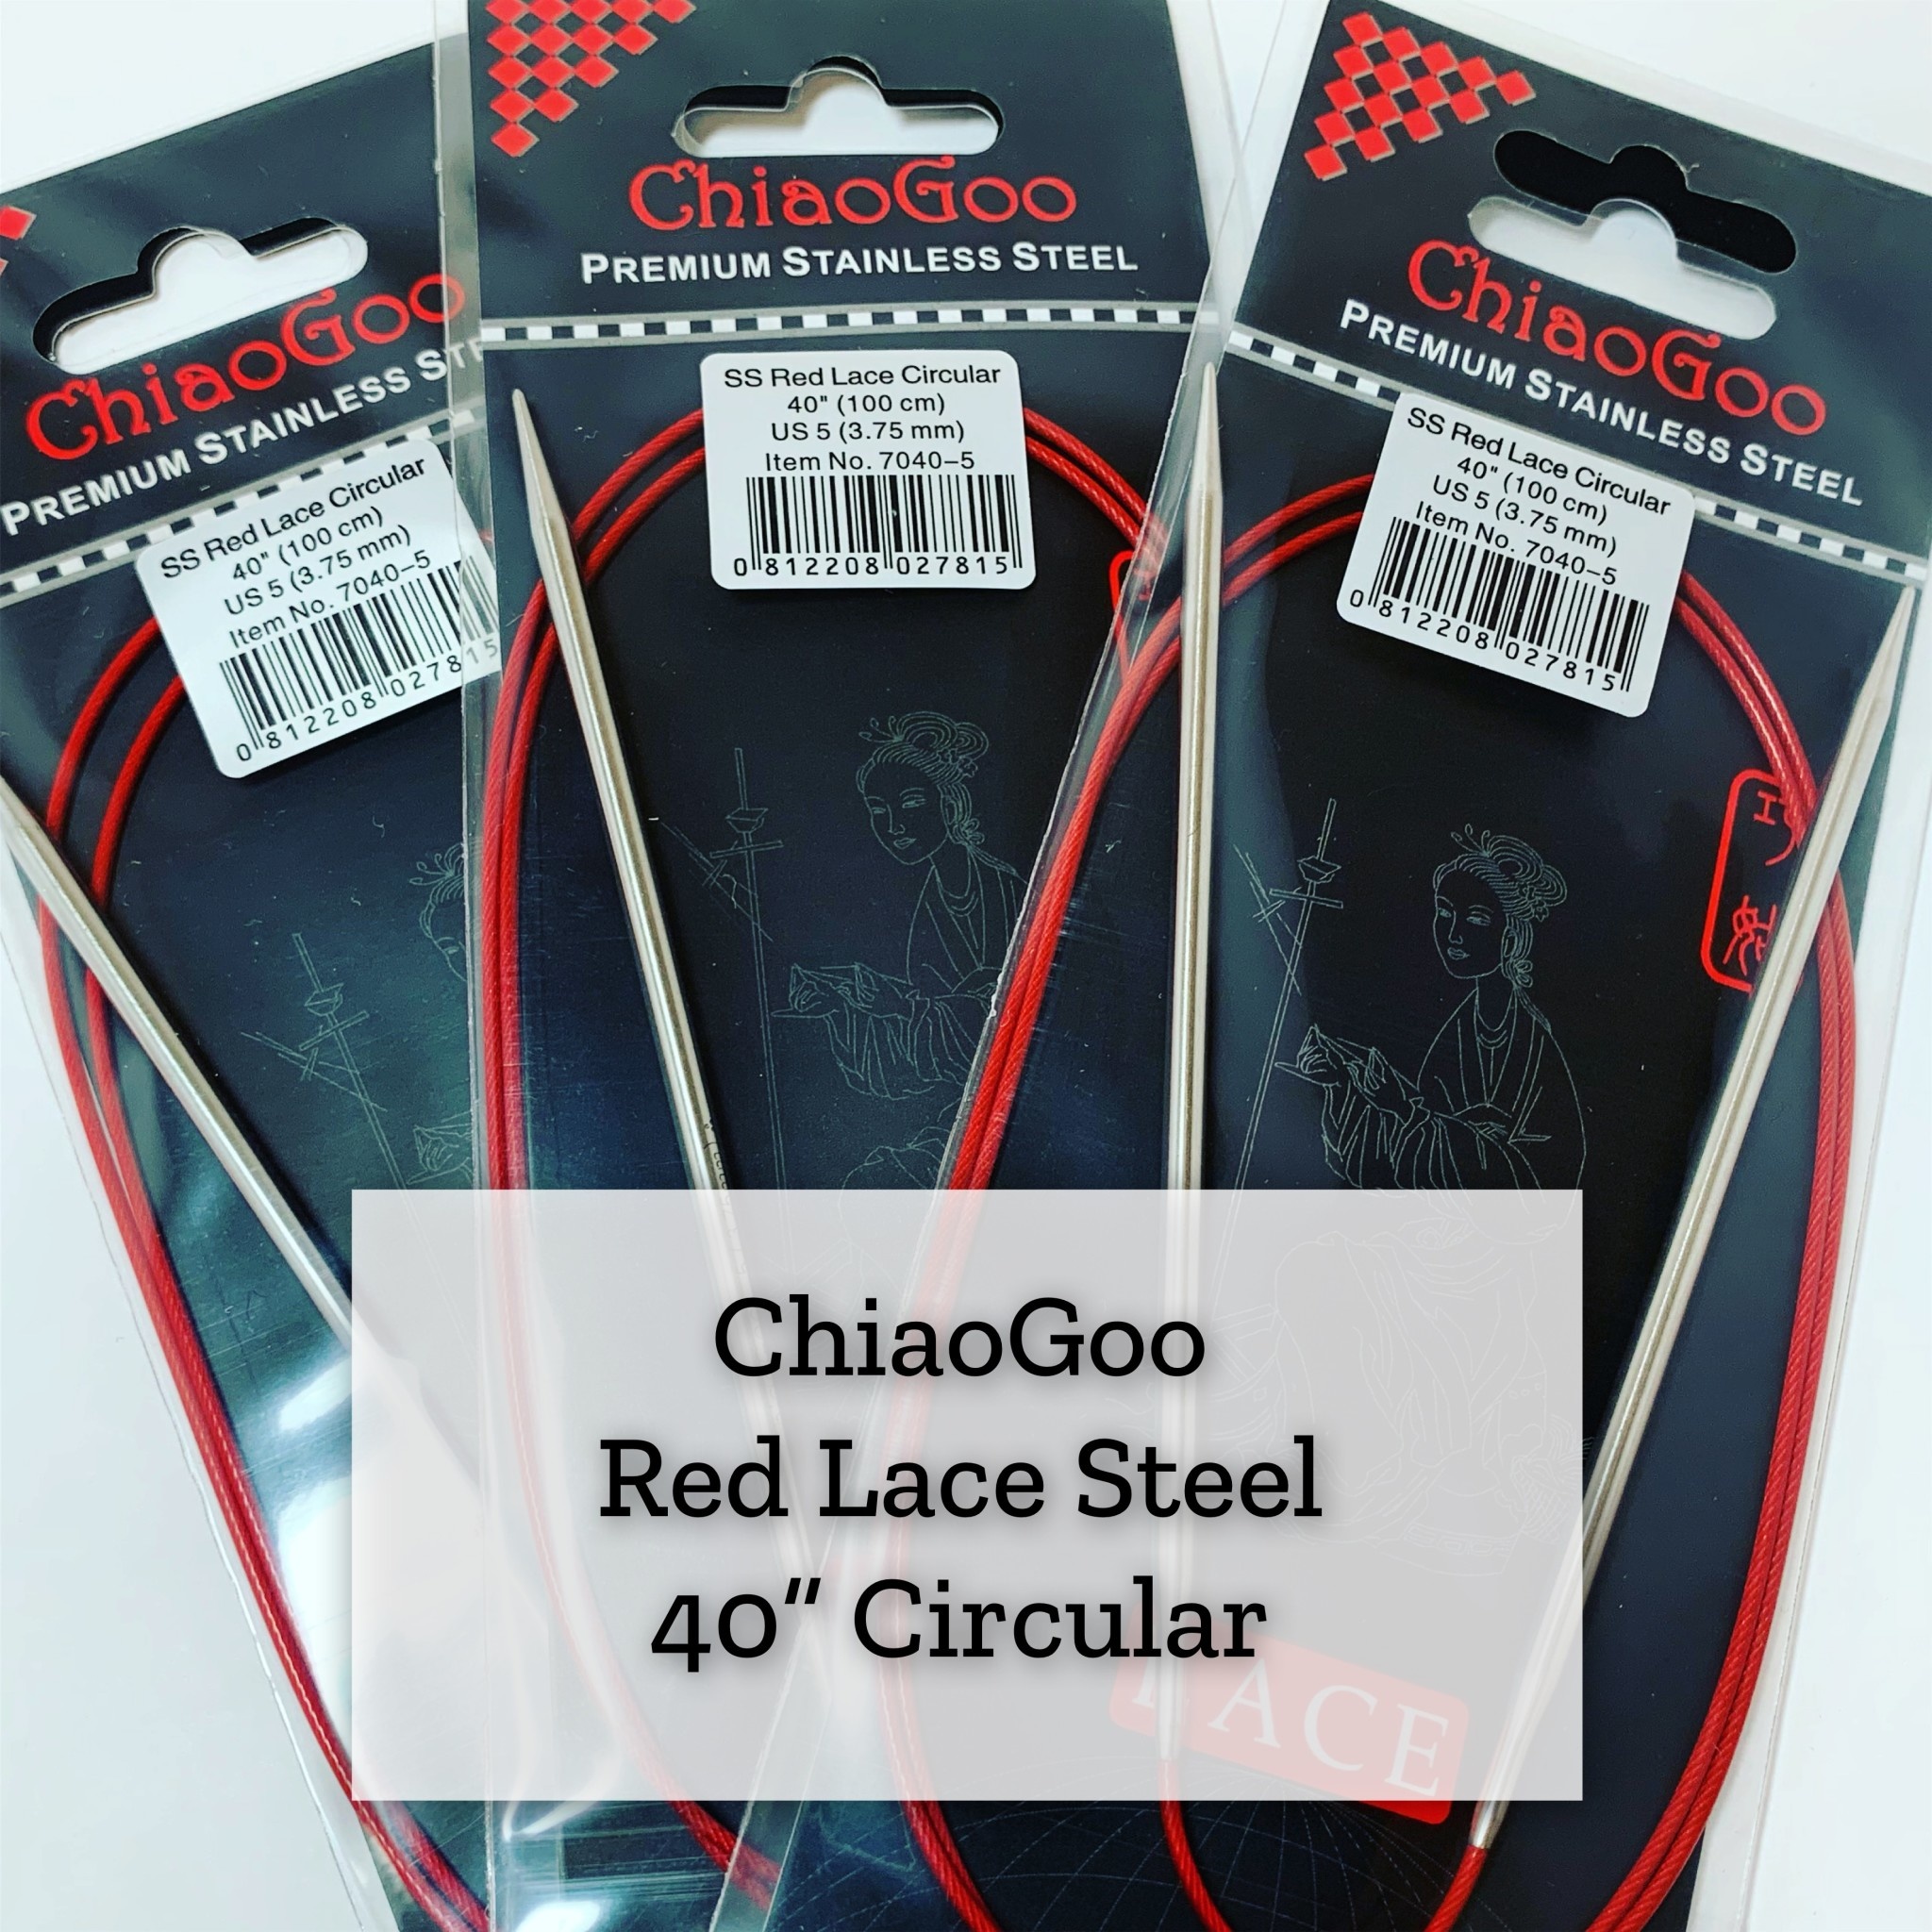 ChiaoGoo Red Lace Steel - 40" 4 mm